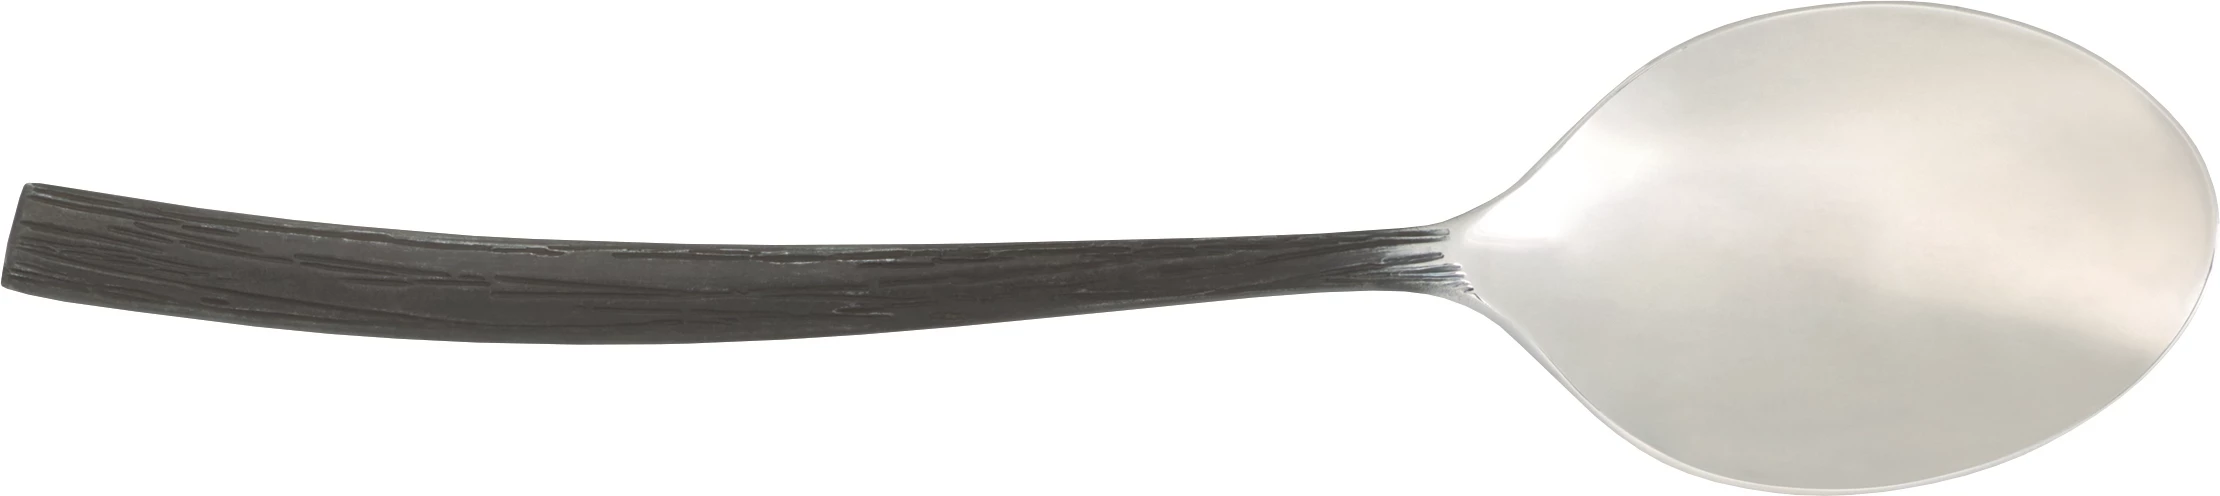 Chef&Sommelier Black Oak suppeske, 18 cm